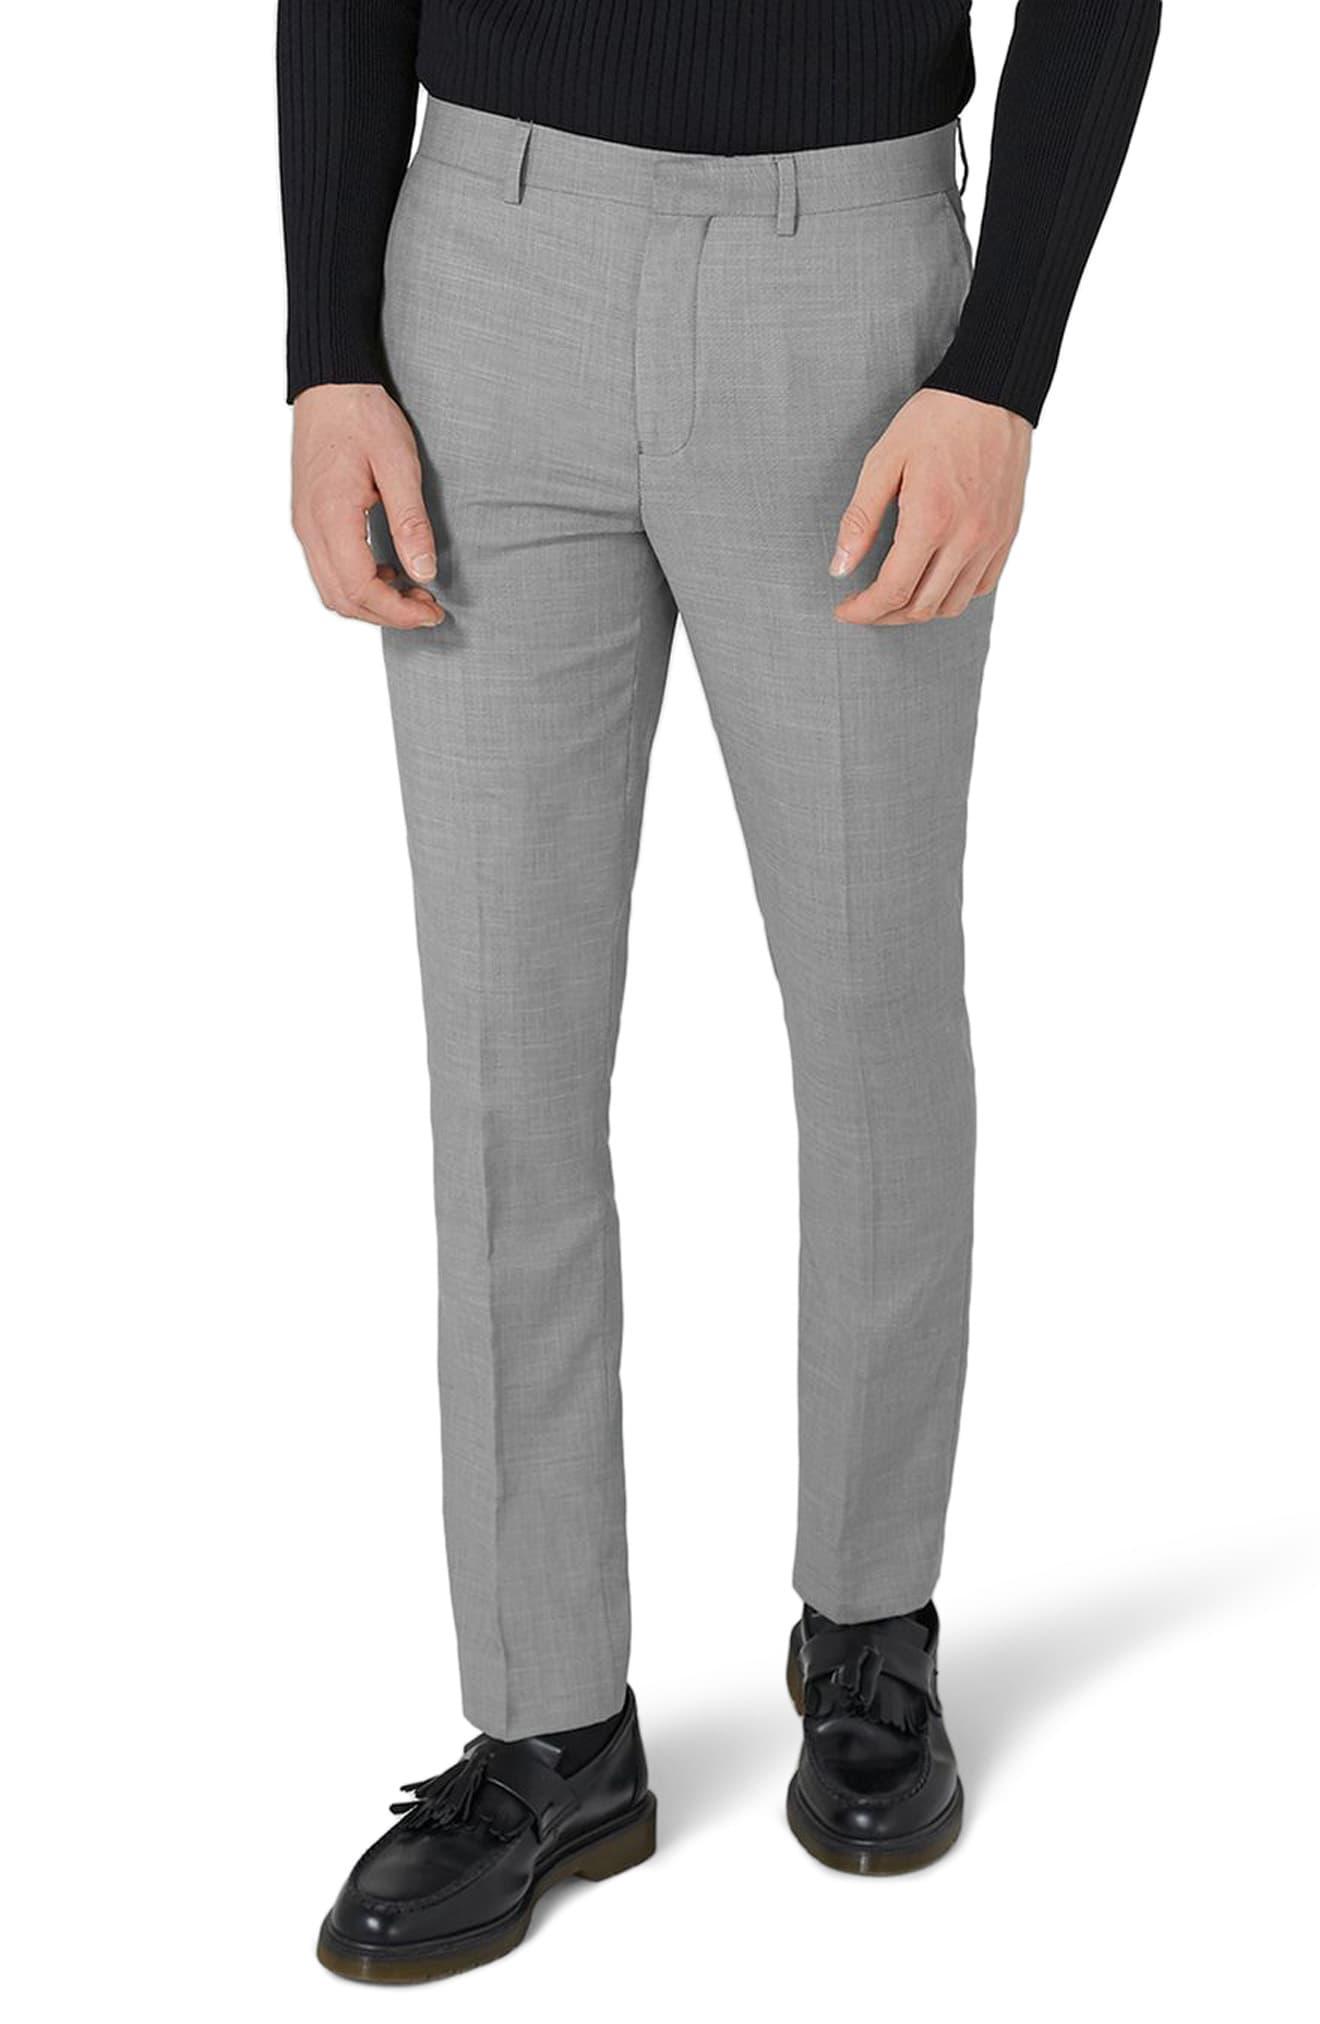 TOPMAN Como Skinny Fit Grey Suit Pants in Gray for Men - Lyst